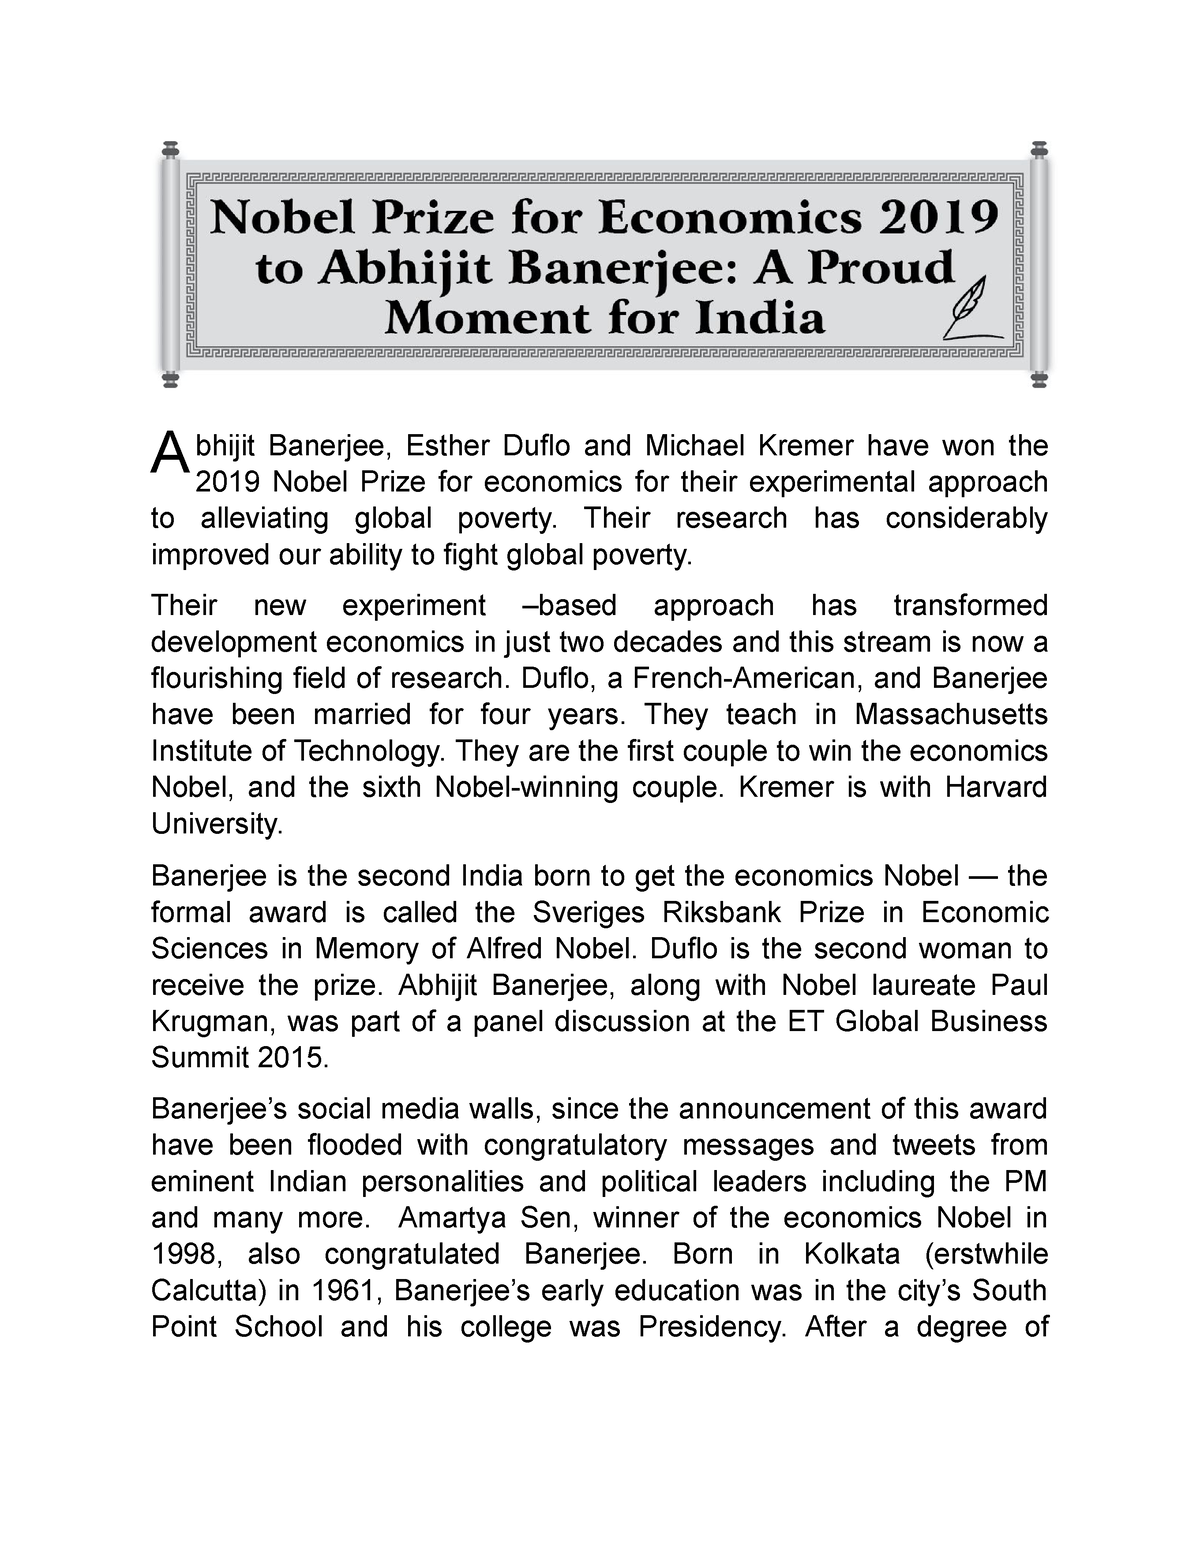 essay nobel prize